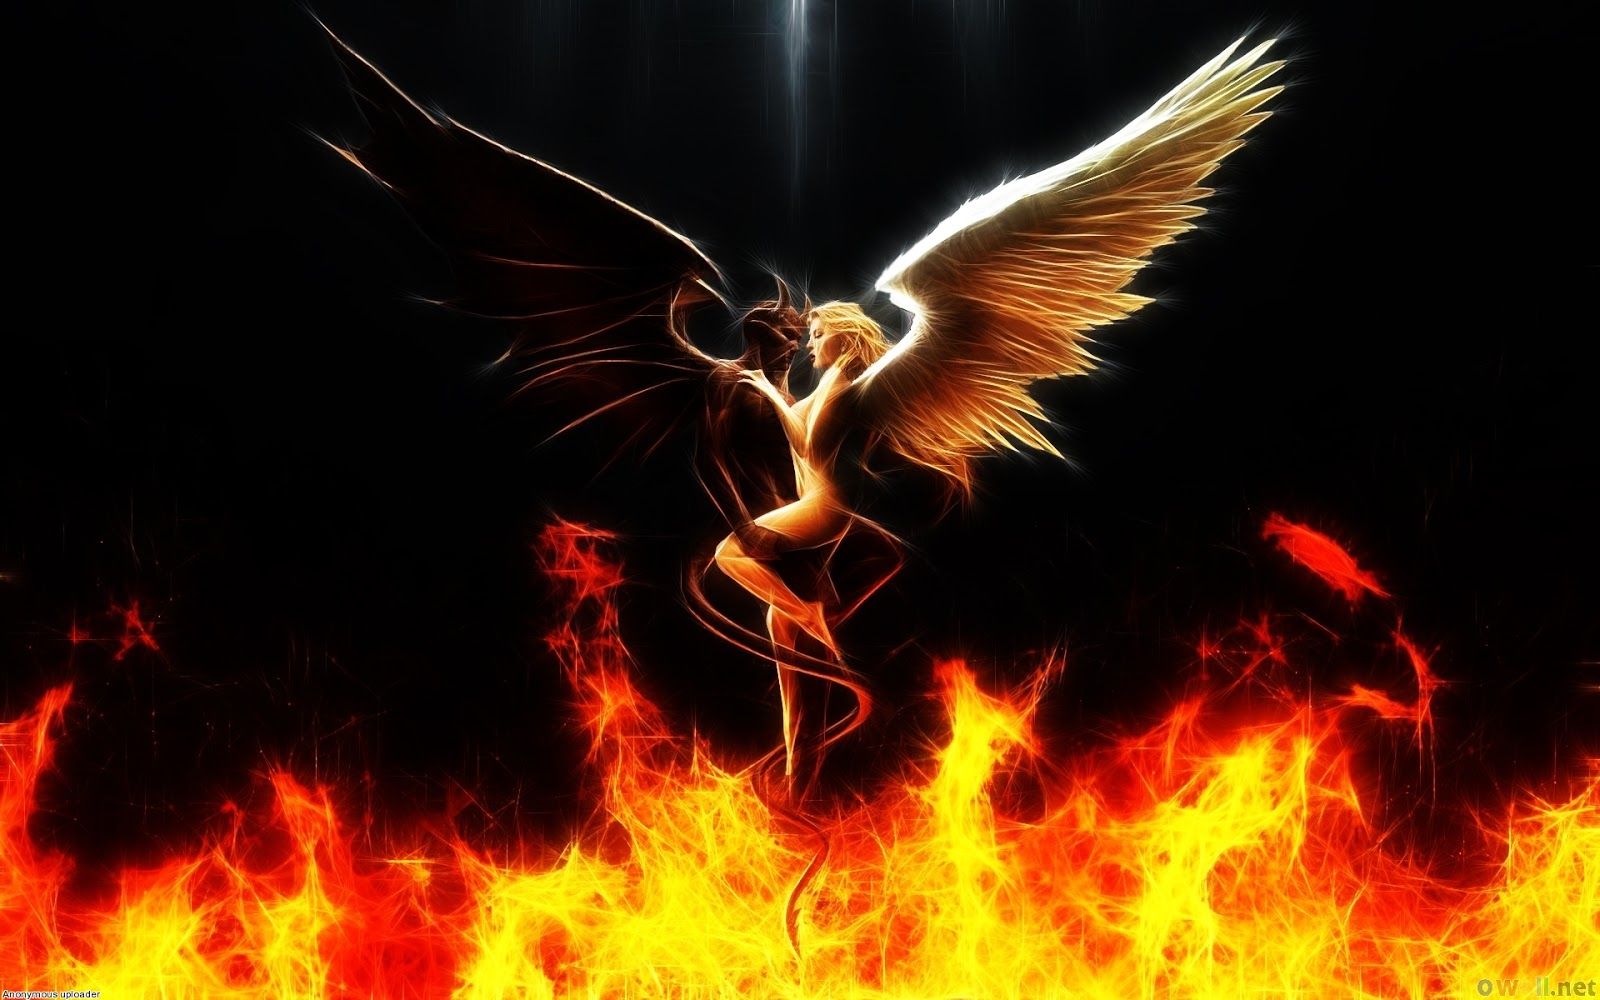 Awesome Angels vs Demons Wallpaper on .hipwallpaper.com